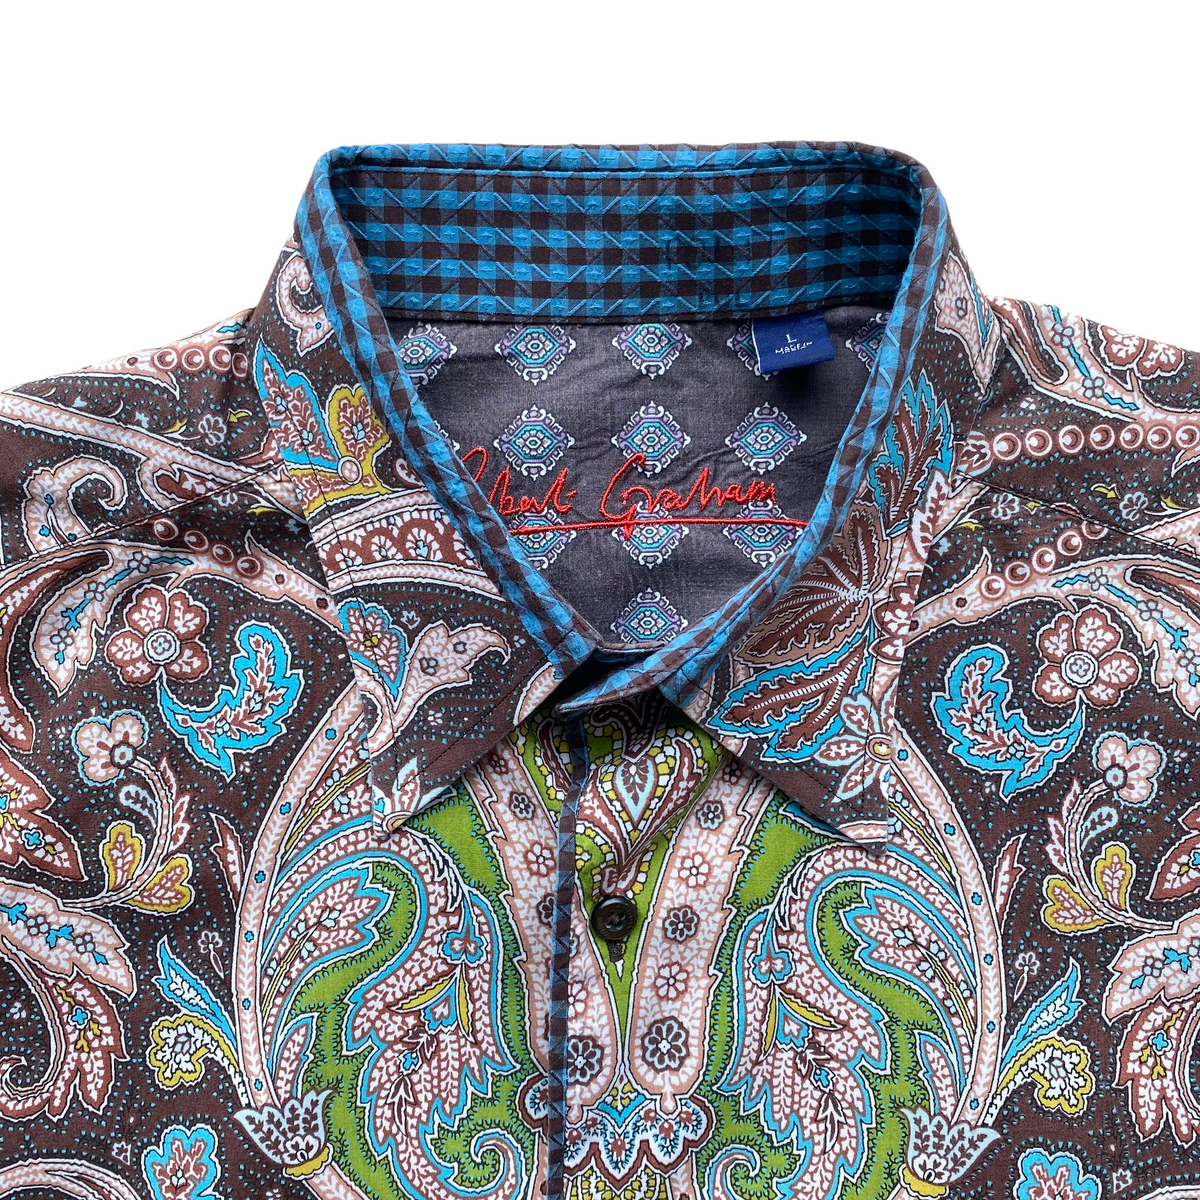 Robert Graham Beautiful Multi Color Paisley Men's S/S Shirt classicFit  Large NEW